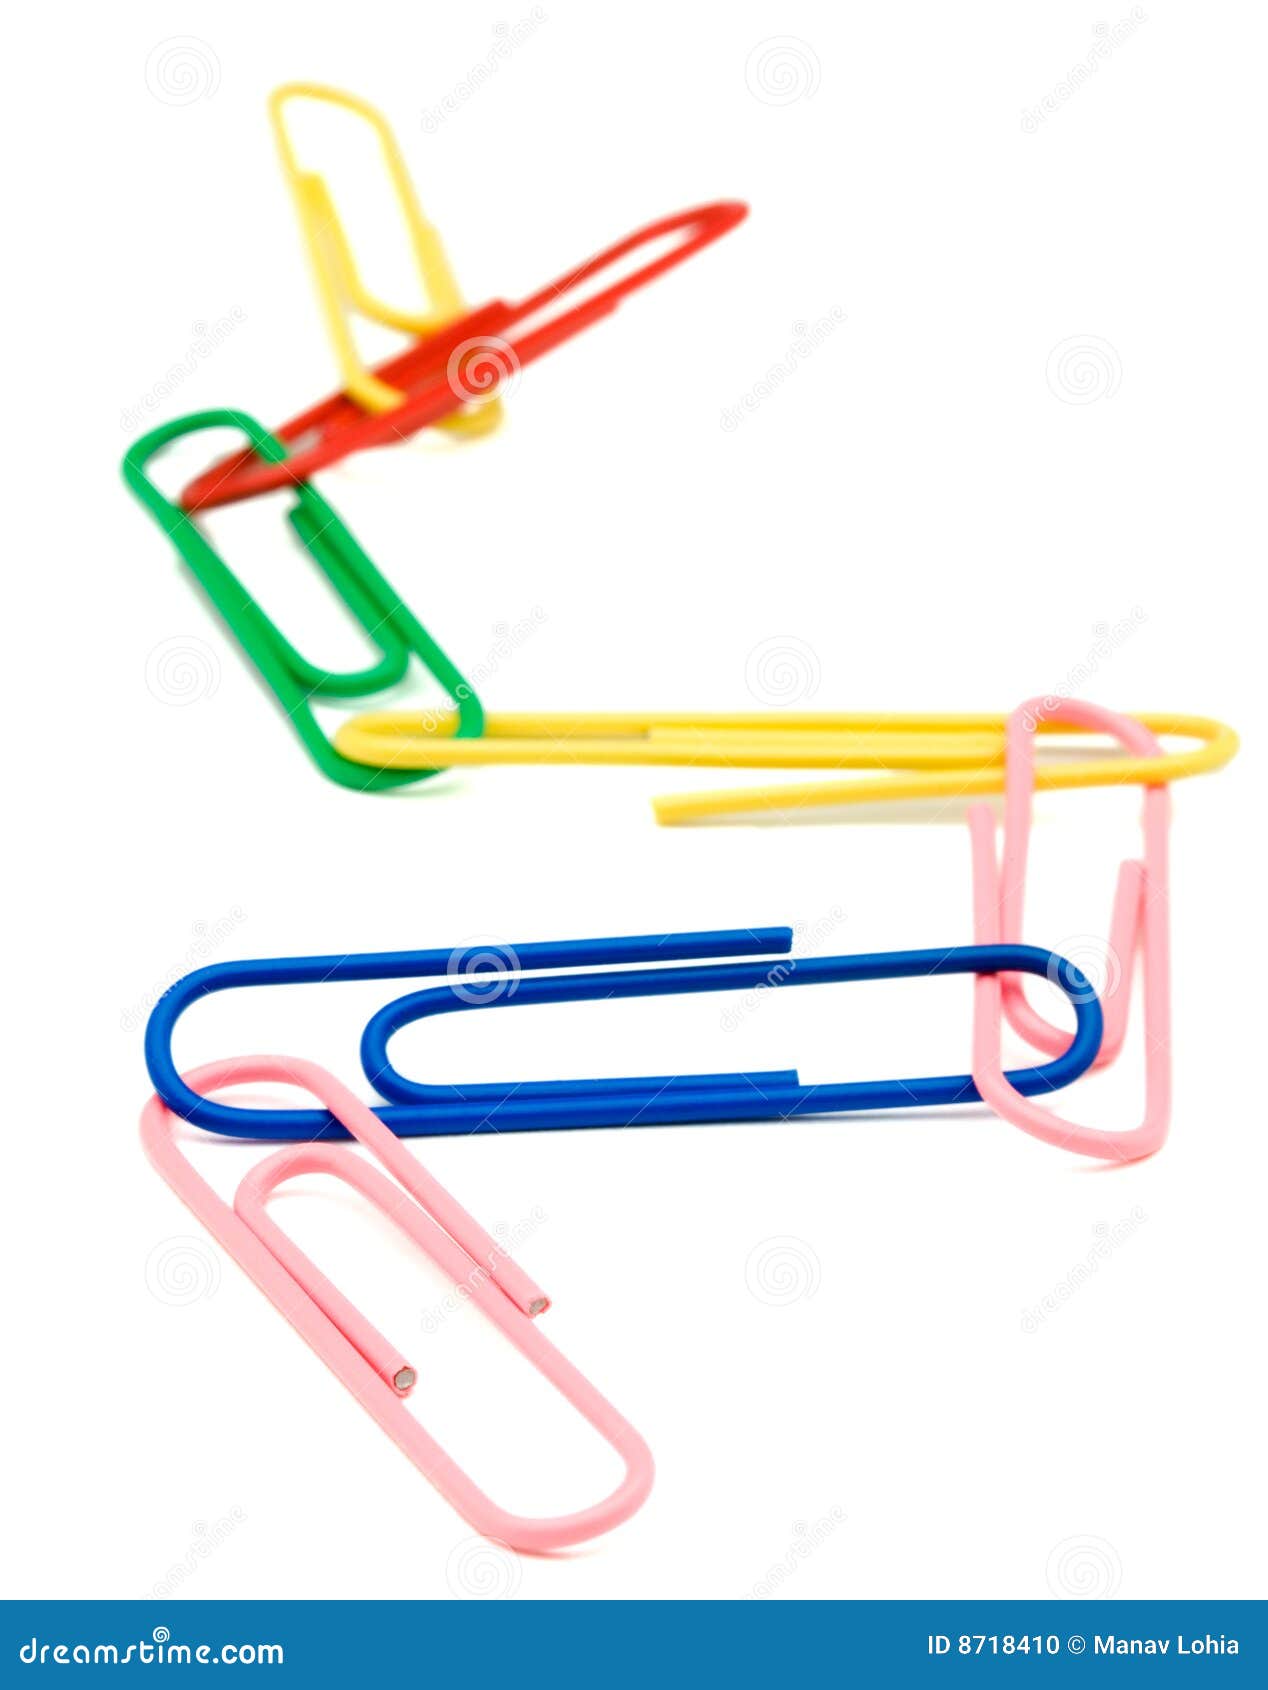 paper clips linked together